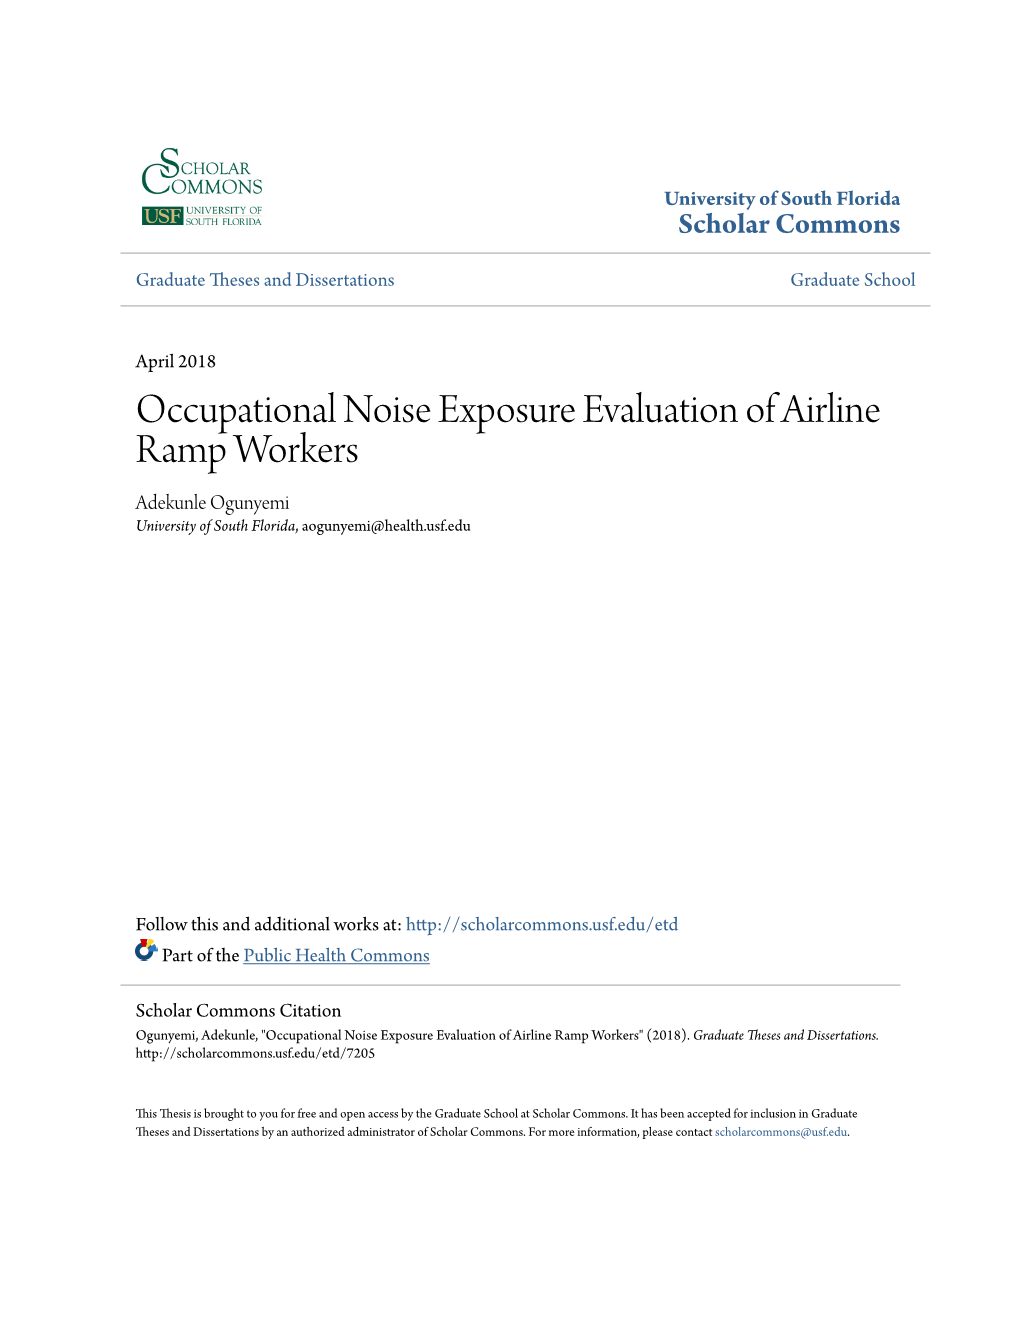 Occupational Noise Exposure Evaluation of Airline Ramp Workers Adekunle Ogunyemi University of South Florida, Aogunyemi@Health.Usf.Edu